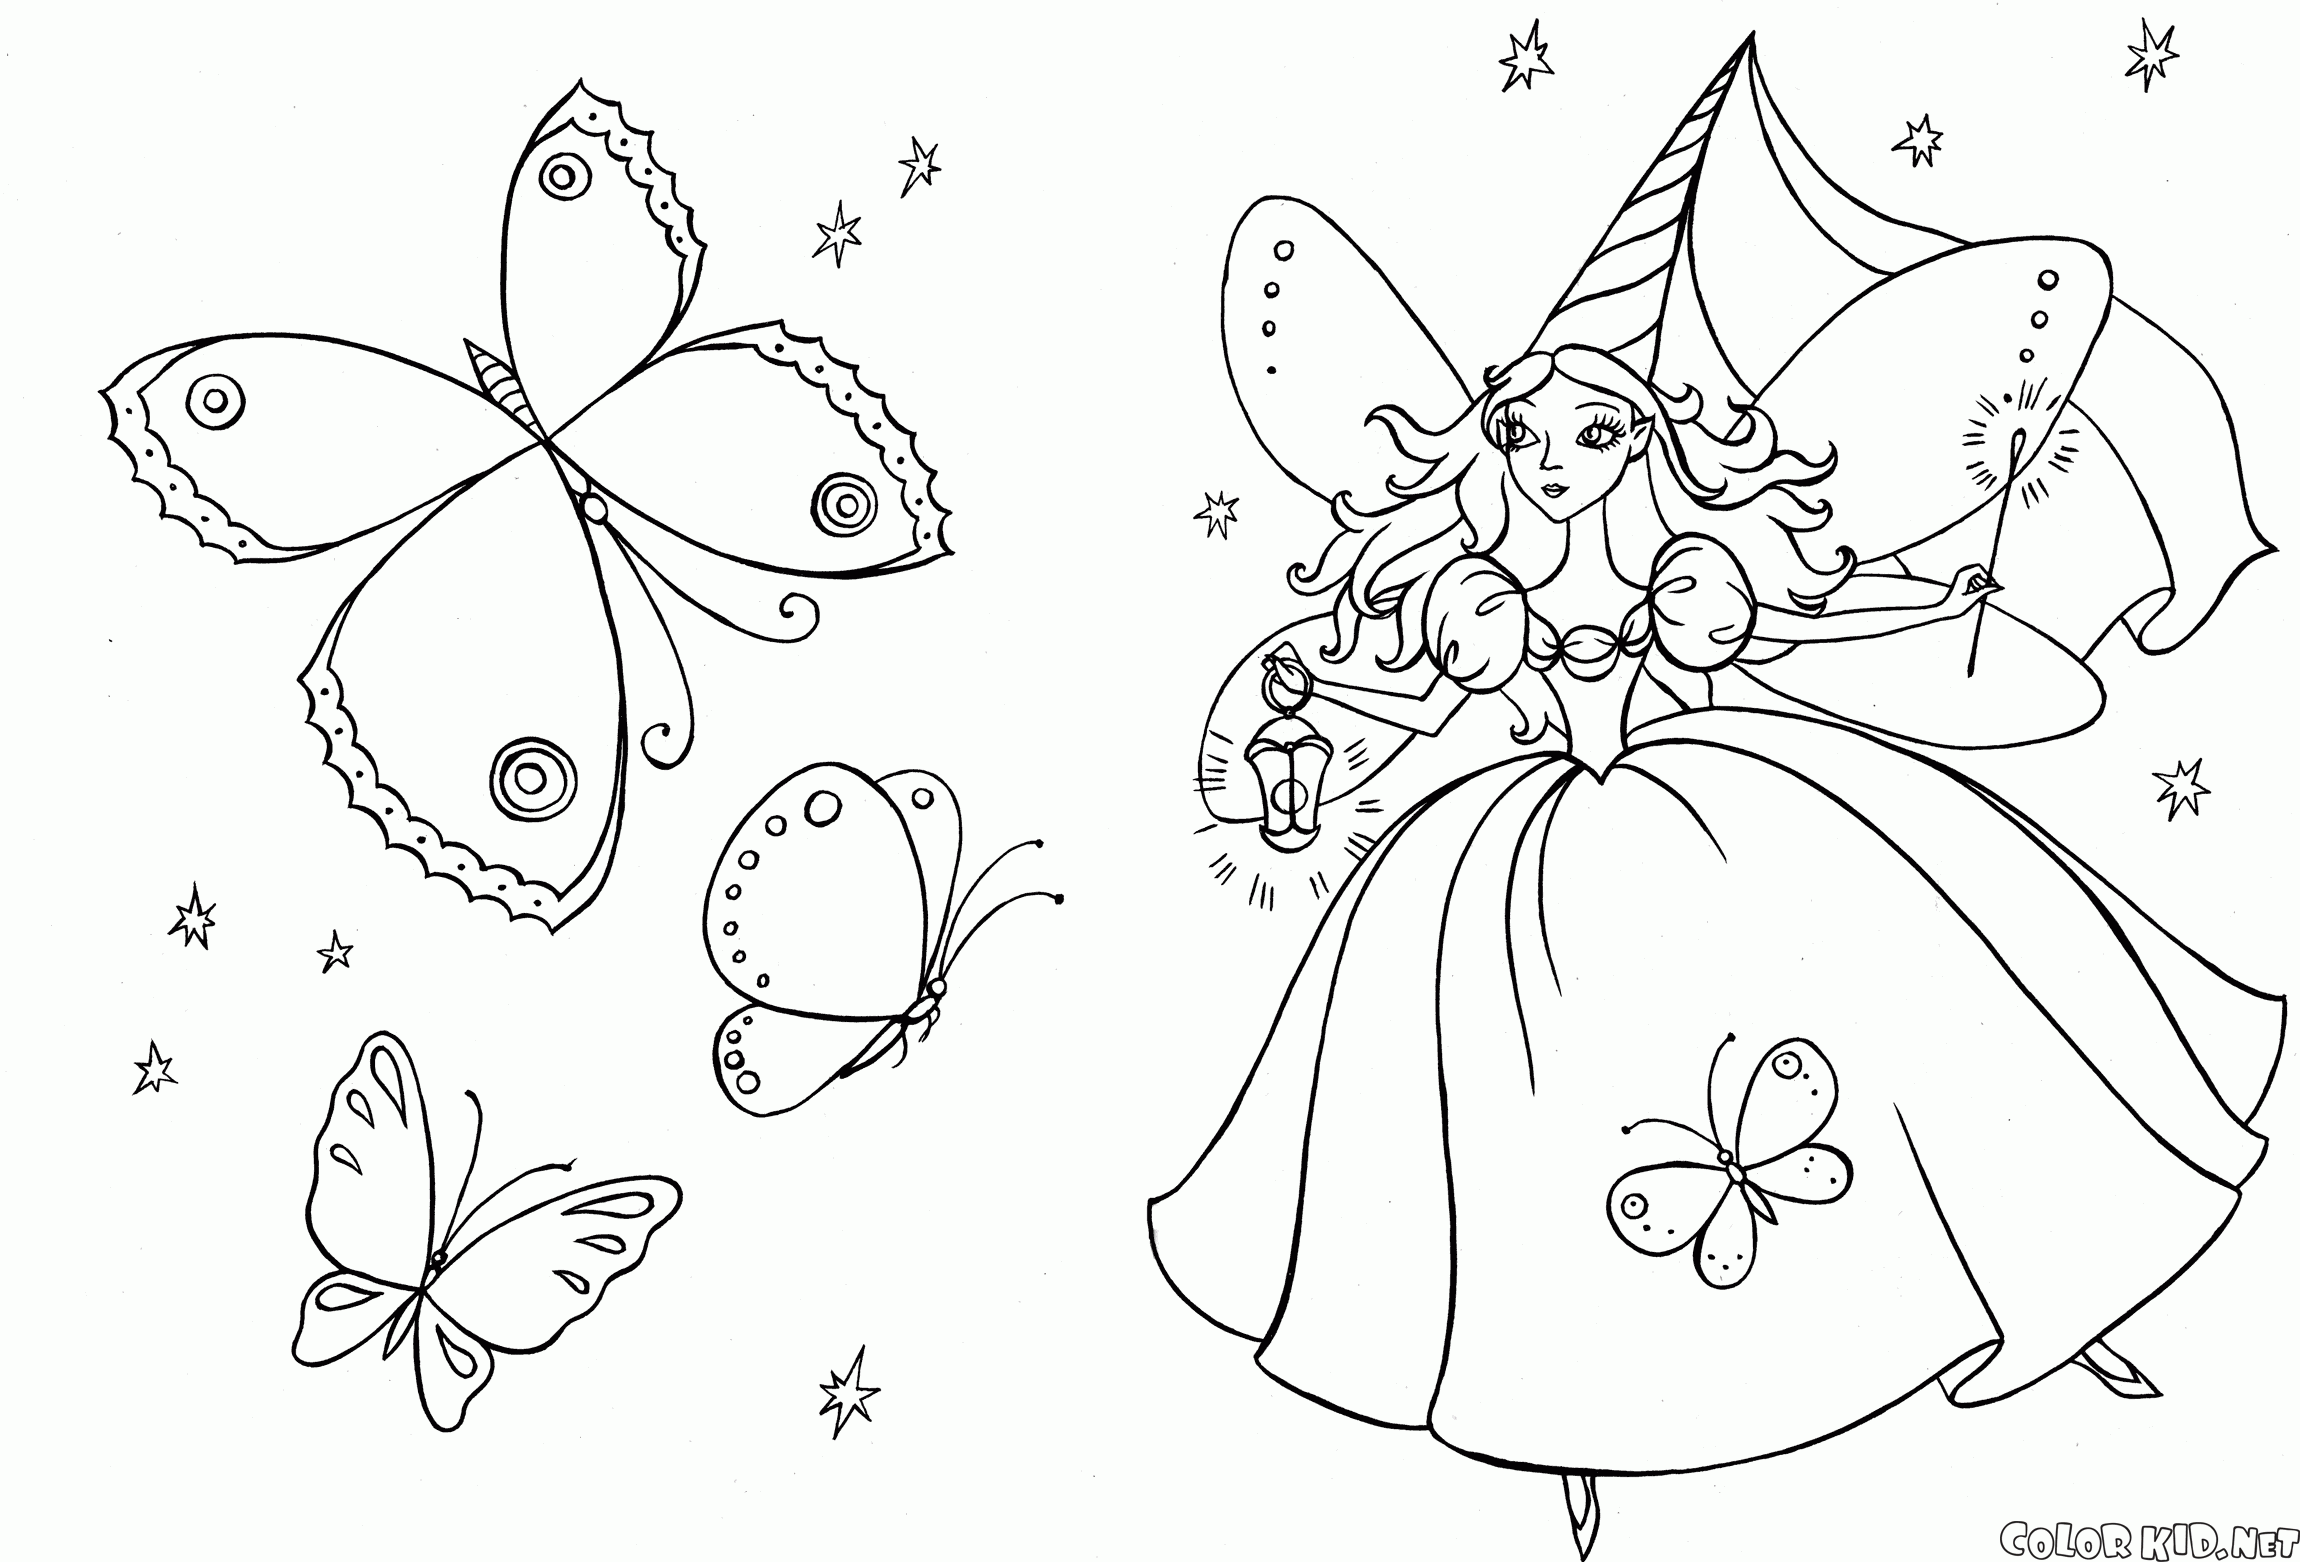 Fairy in a beautiful garden